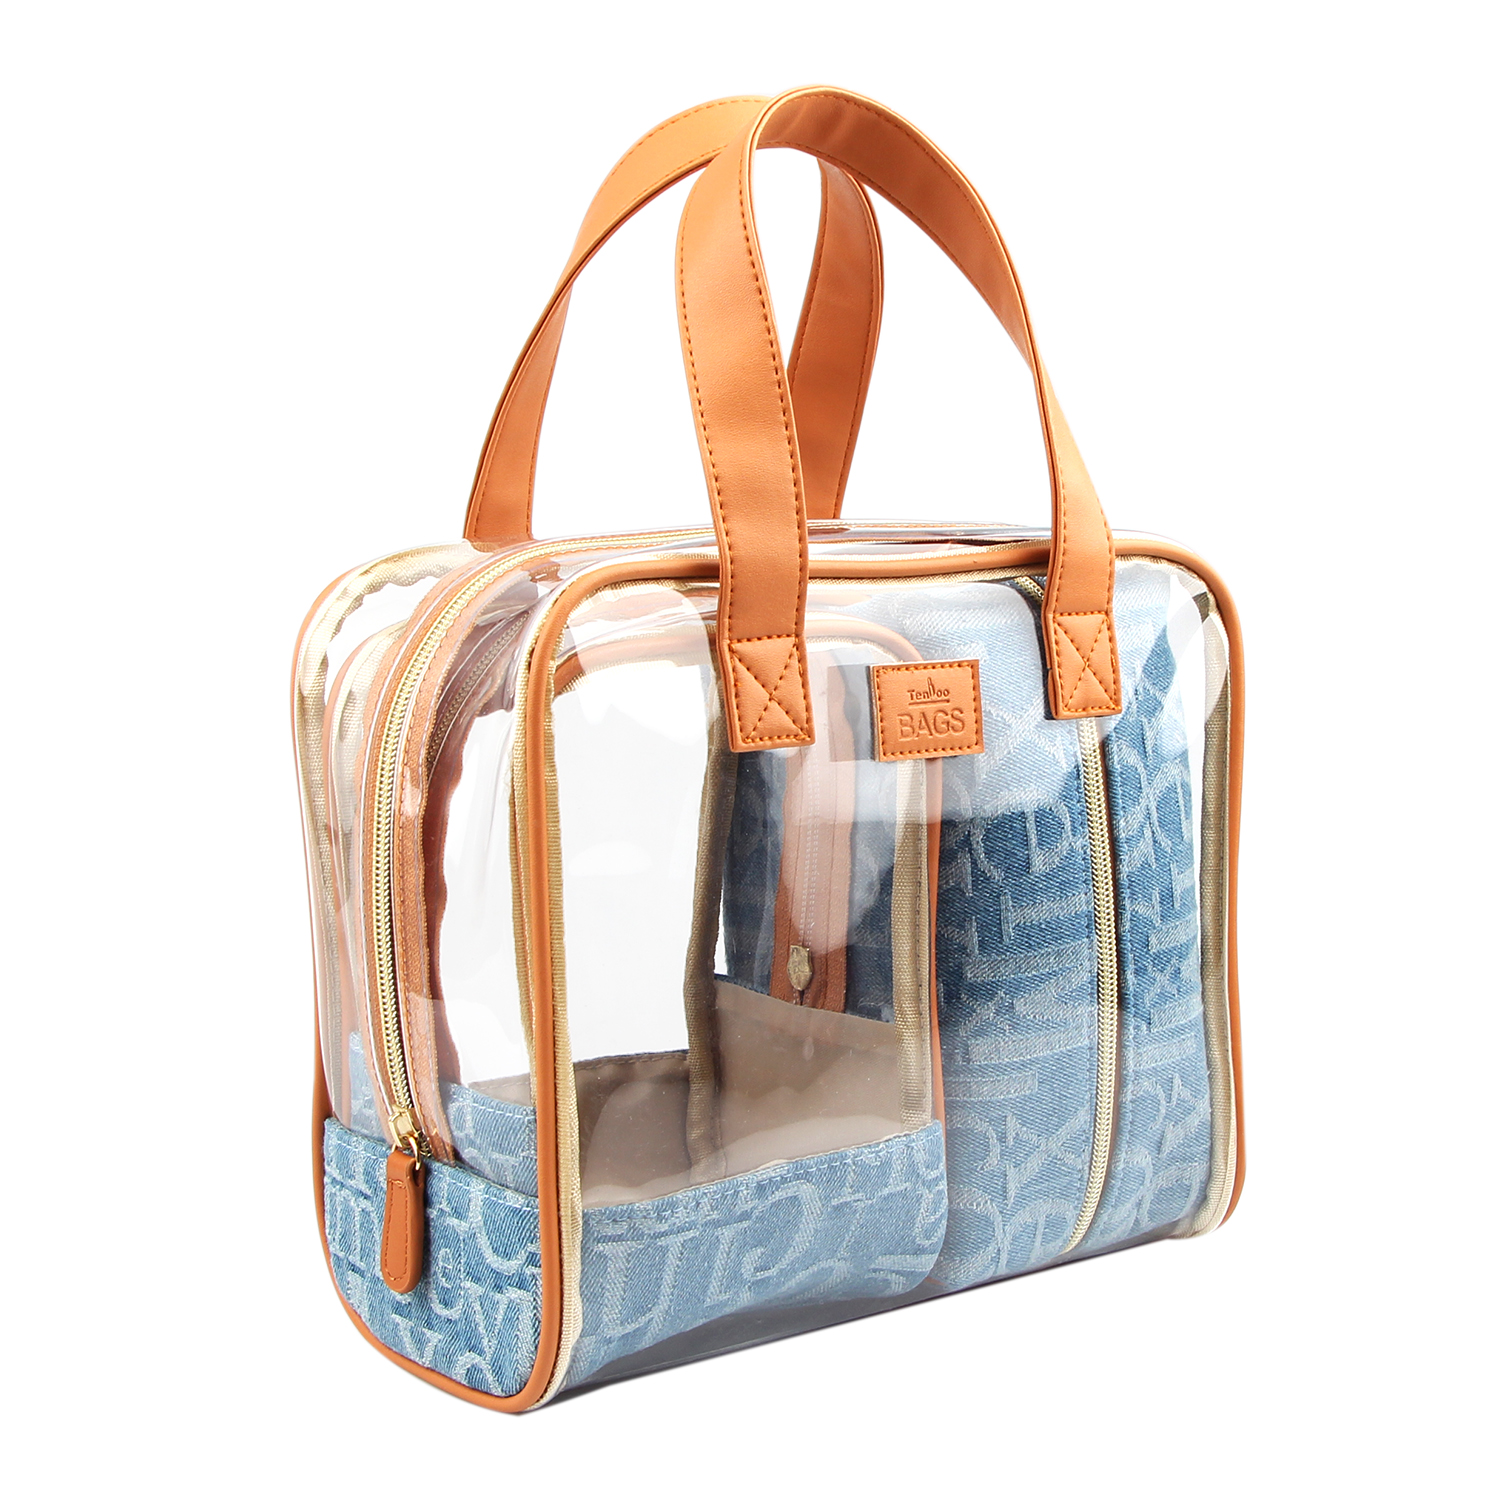 Makeup Bag for Women Travel Cosmetic Bag Set of 3-Piece Jeans Cosmetic Makeup Bag Set For Travel, Beauty Organization, Cotton Denim (3 Sizes: Large, Medium, Small)